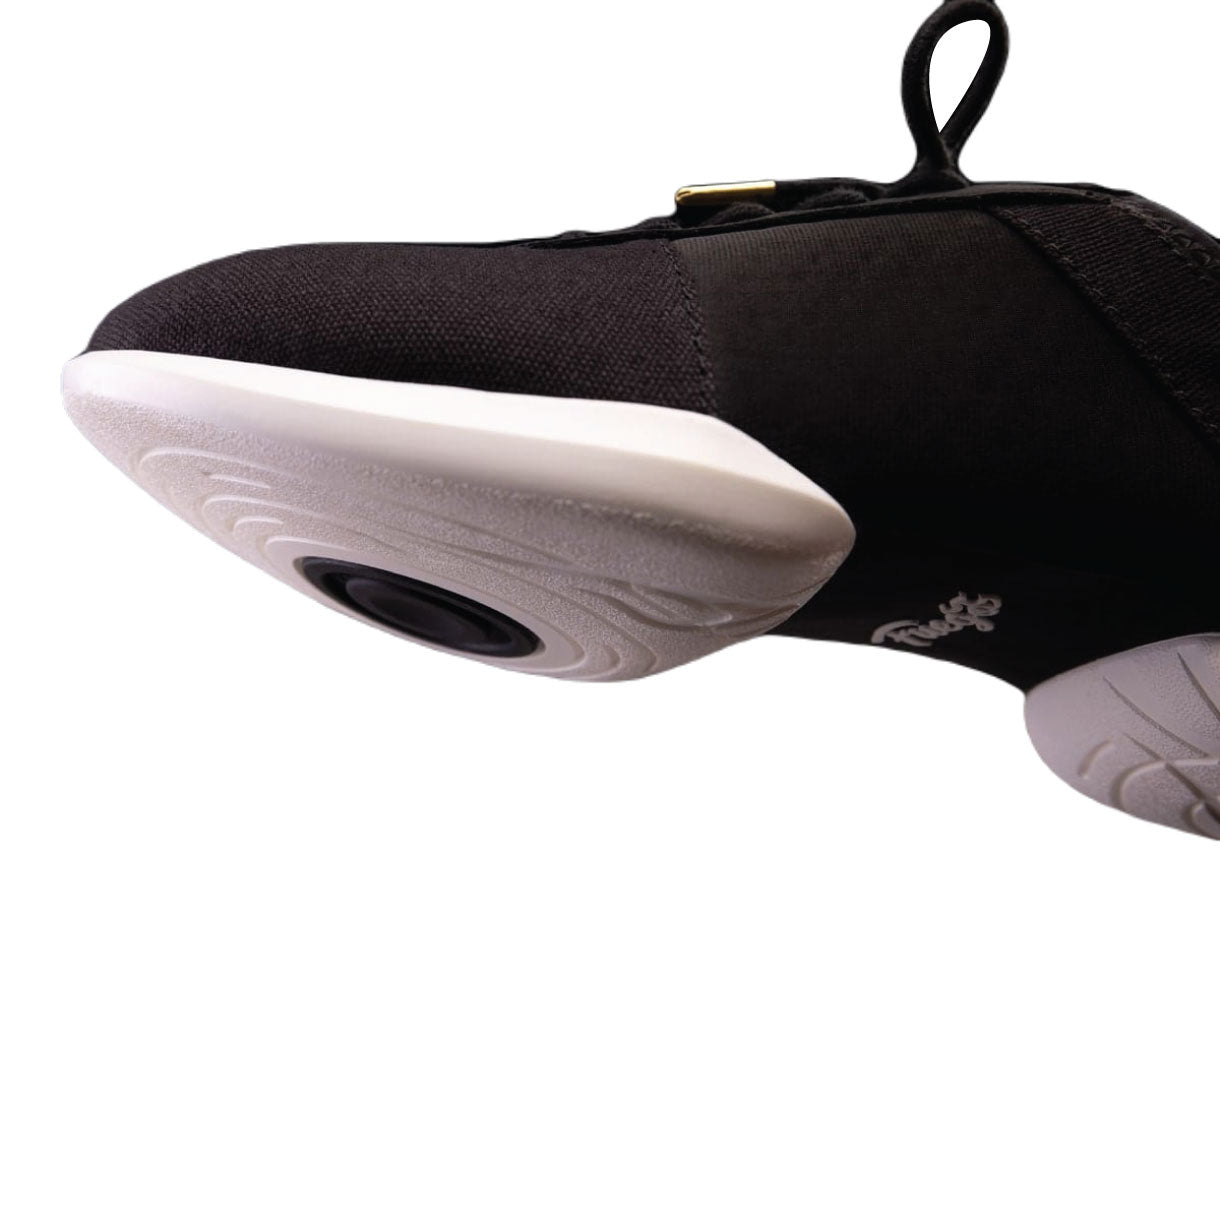 Sneaker Fuego Dance en noir avec saumure fendue blanche